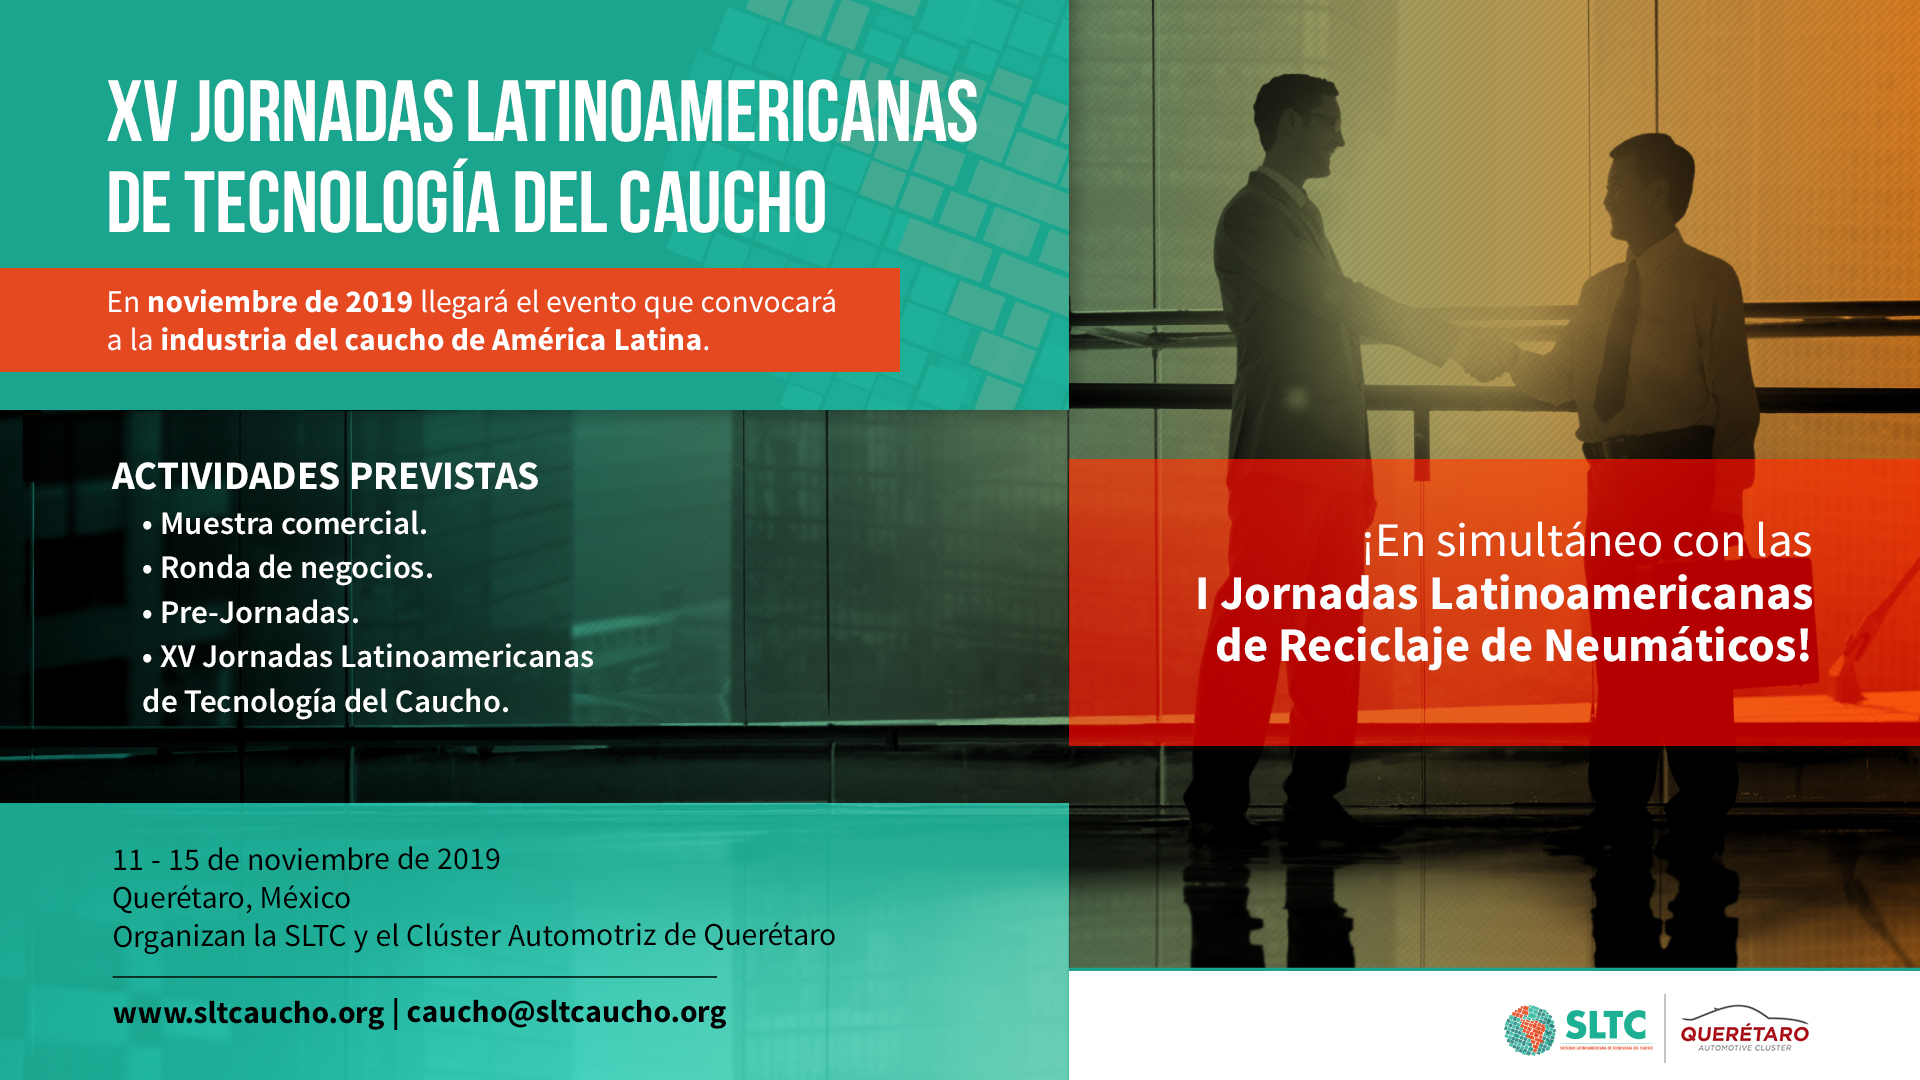 SLTC organiza as XV Jornadas Latinoamericanas del Caucho